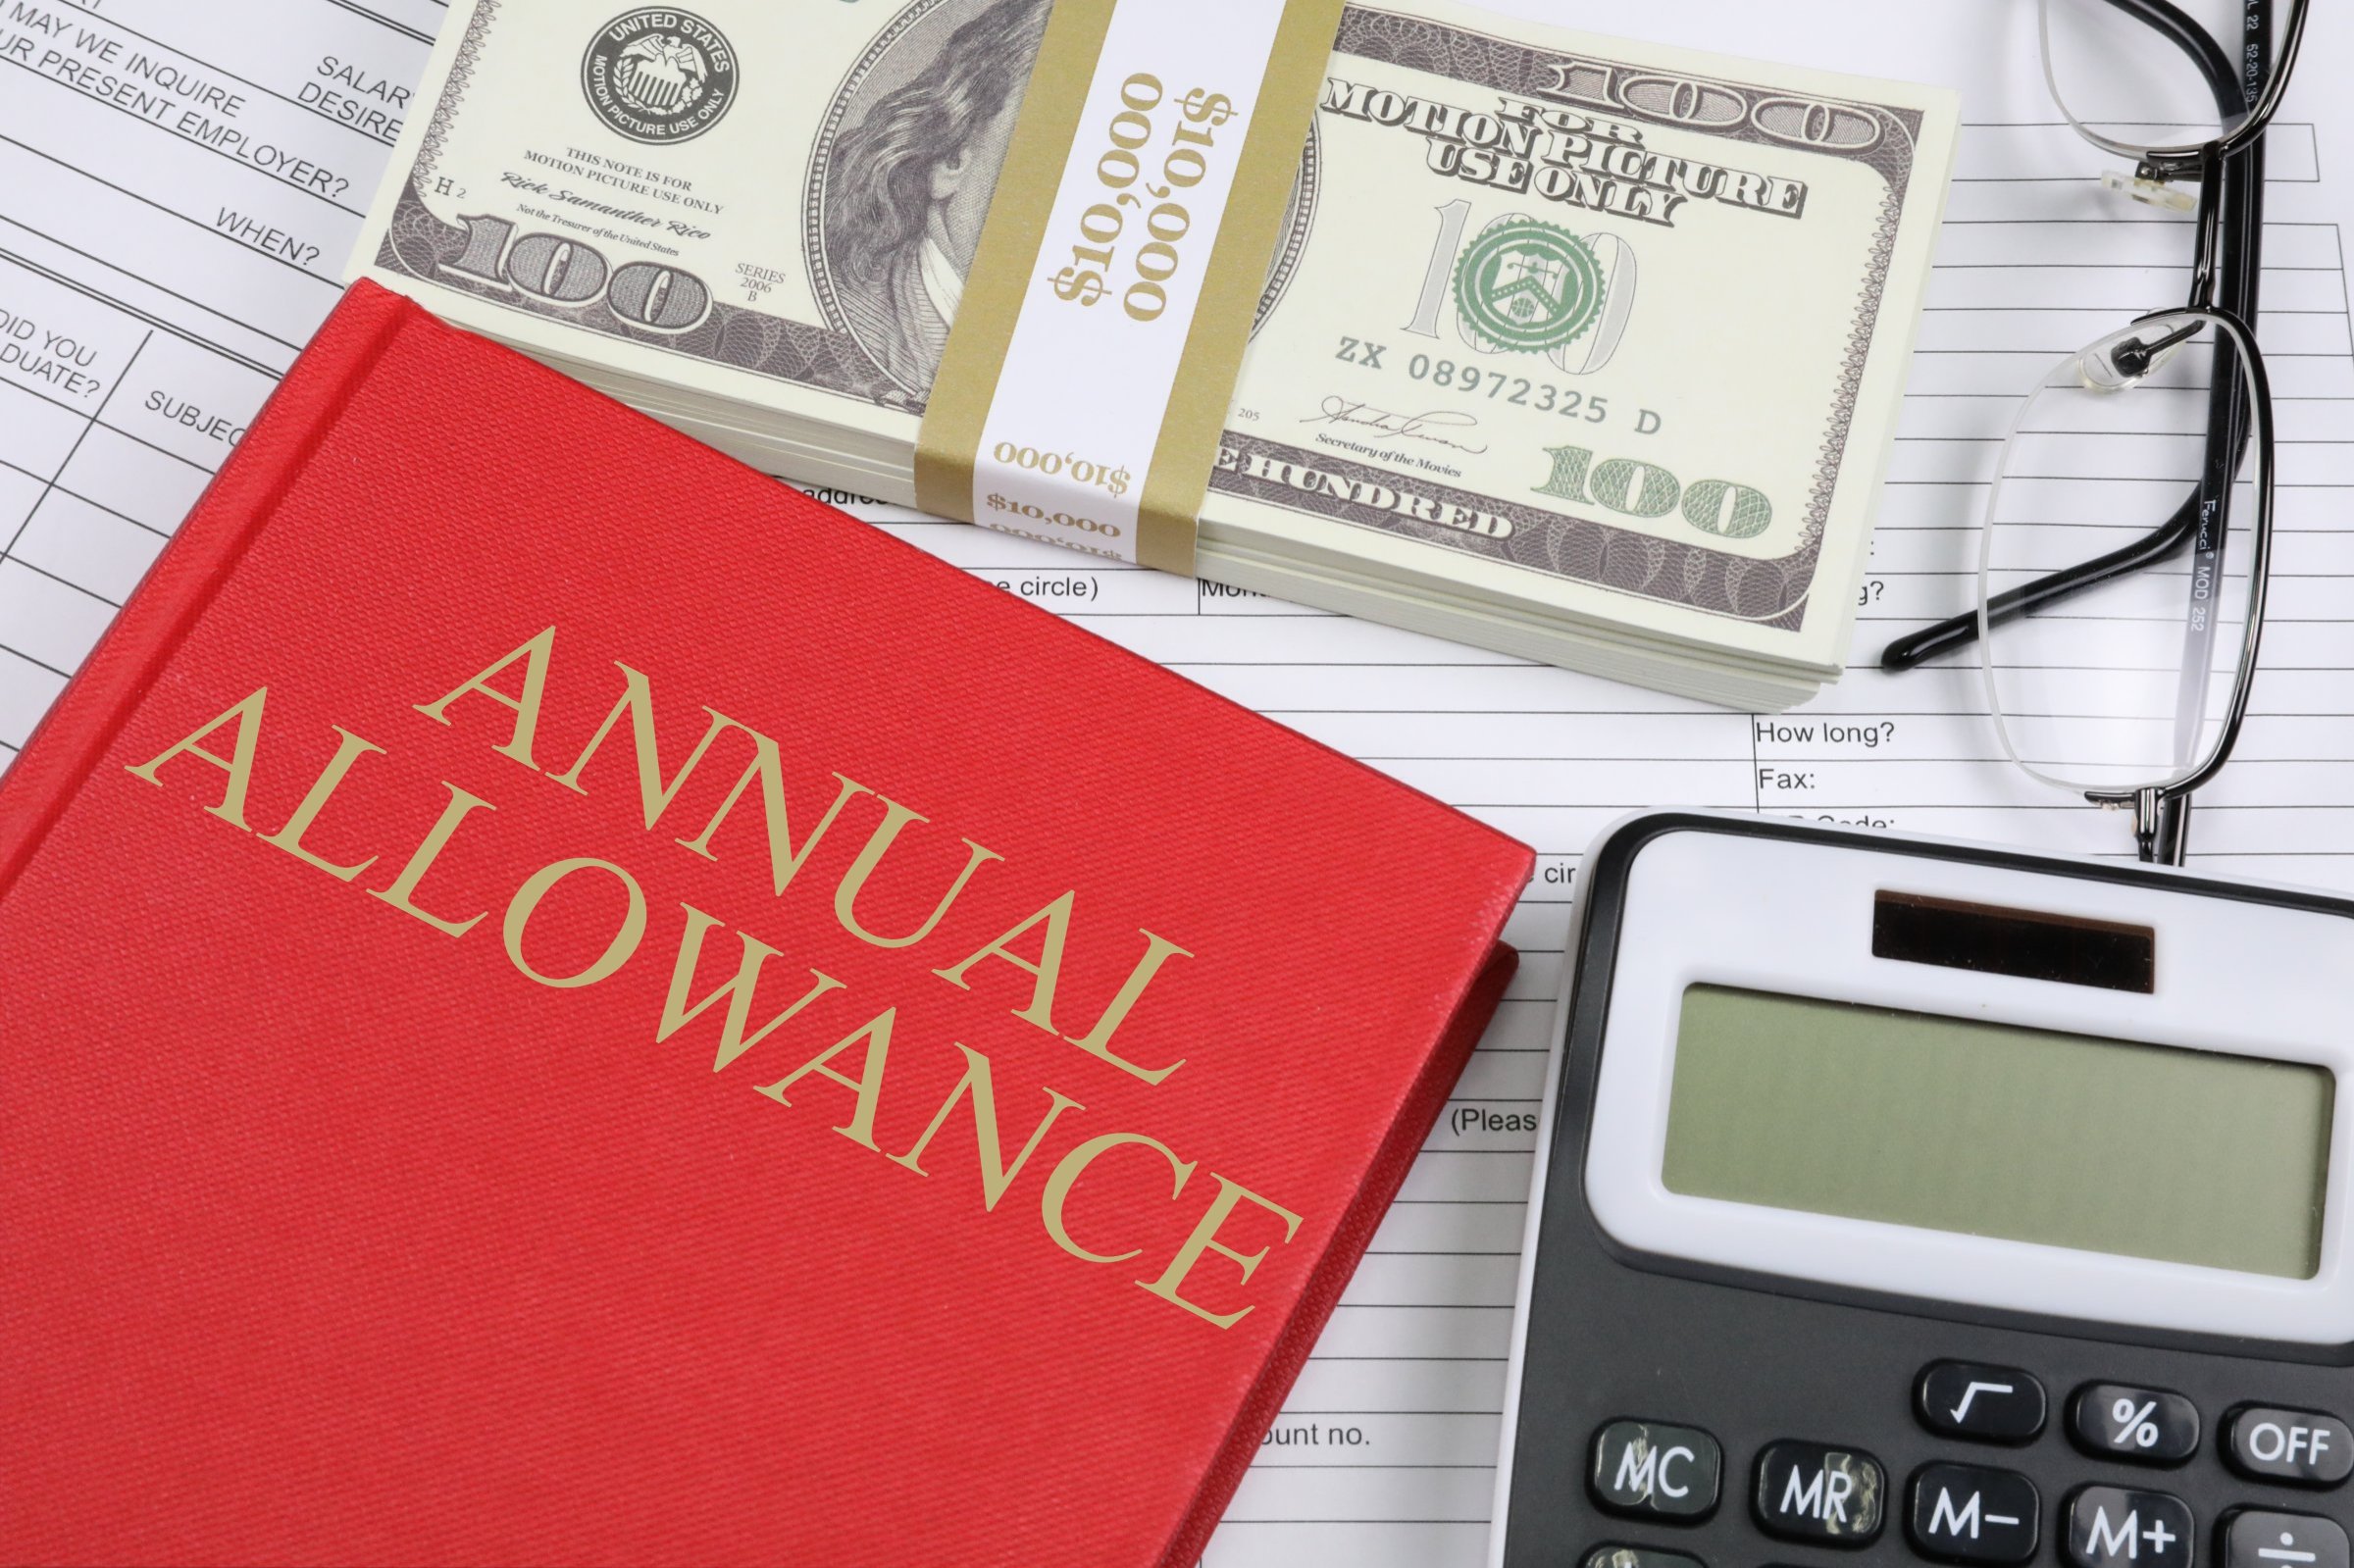 annual allowance